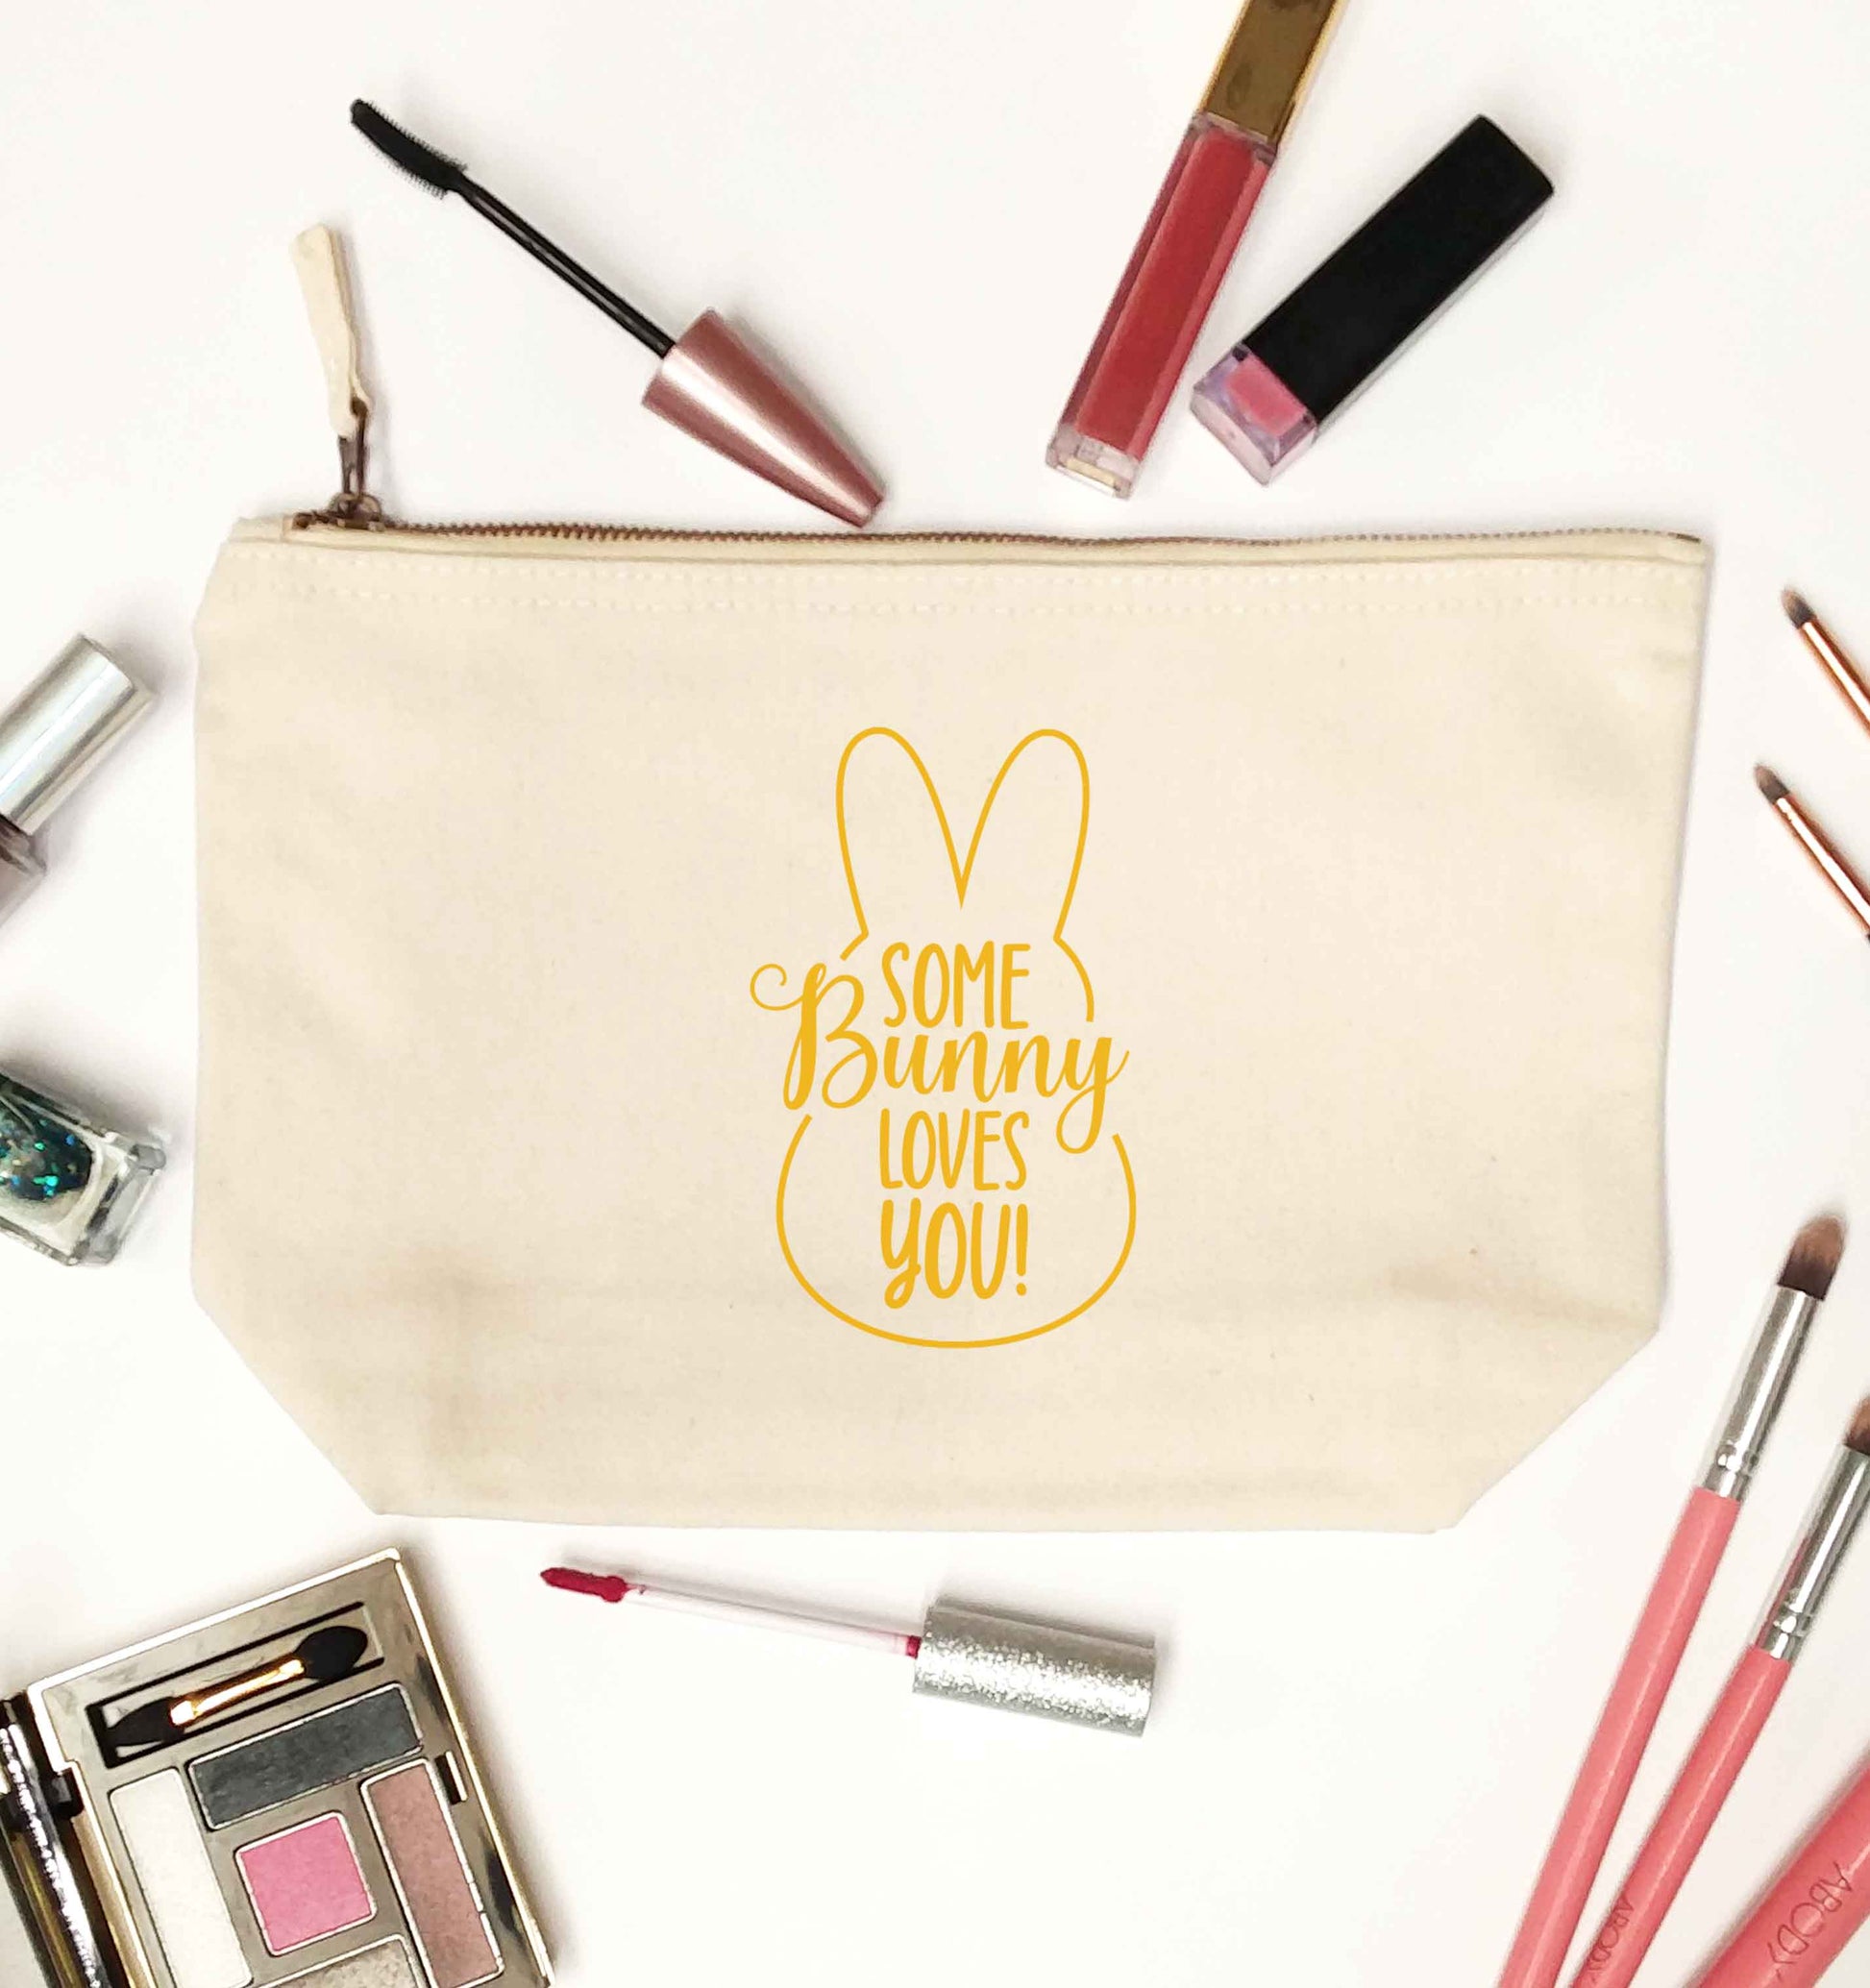 Some bunny loves you natural makeup bag